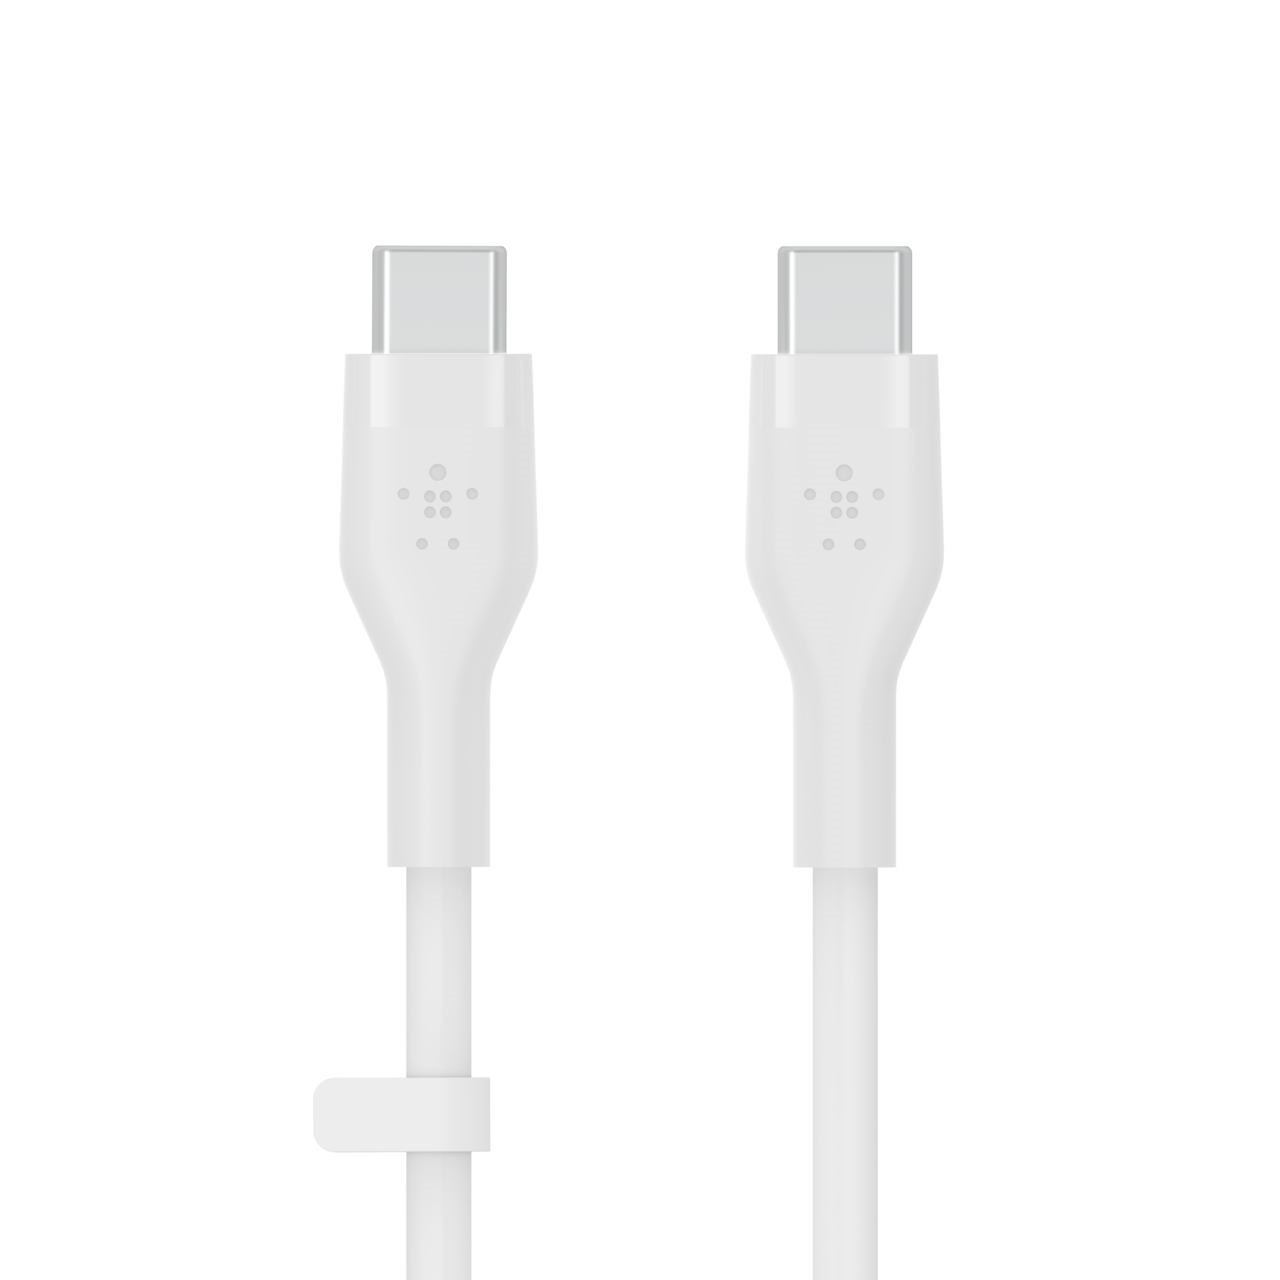 Belkin BoostCharge 1 m USB-C Data Transfer Cable for iPad Pro, iPad mini, iPad Air - 2 Pack